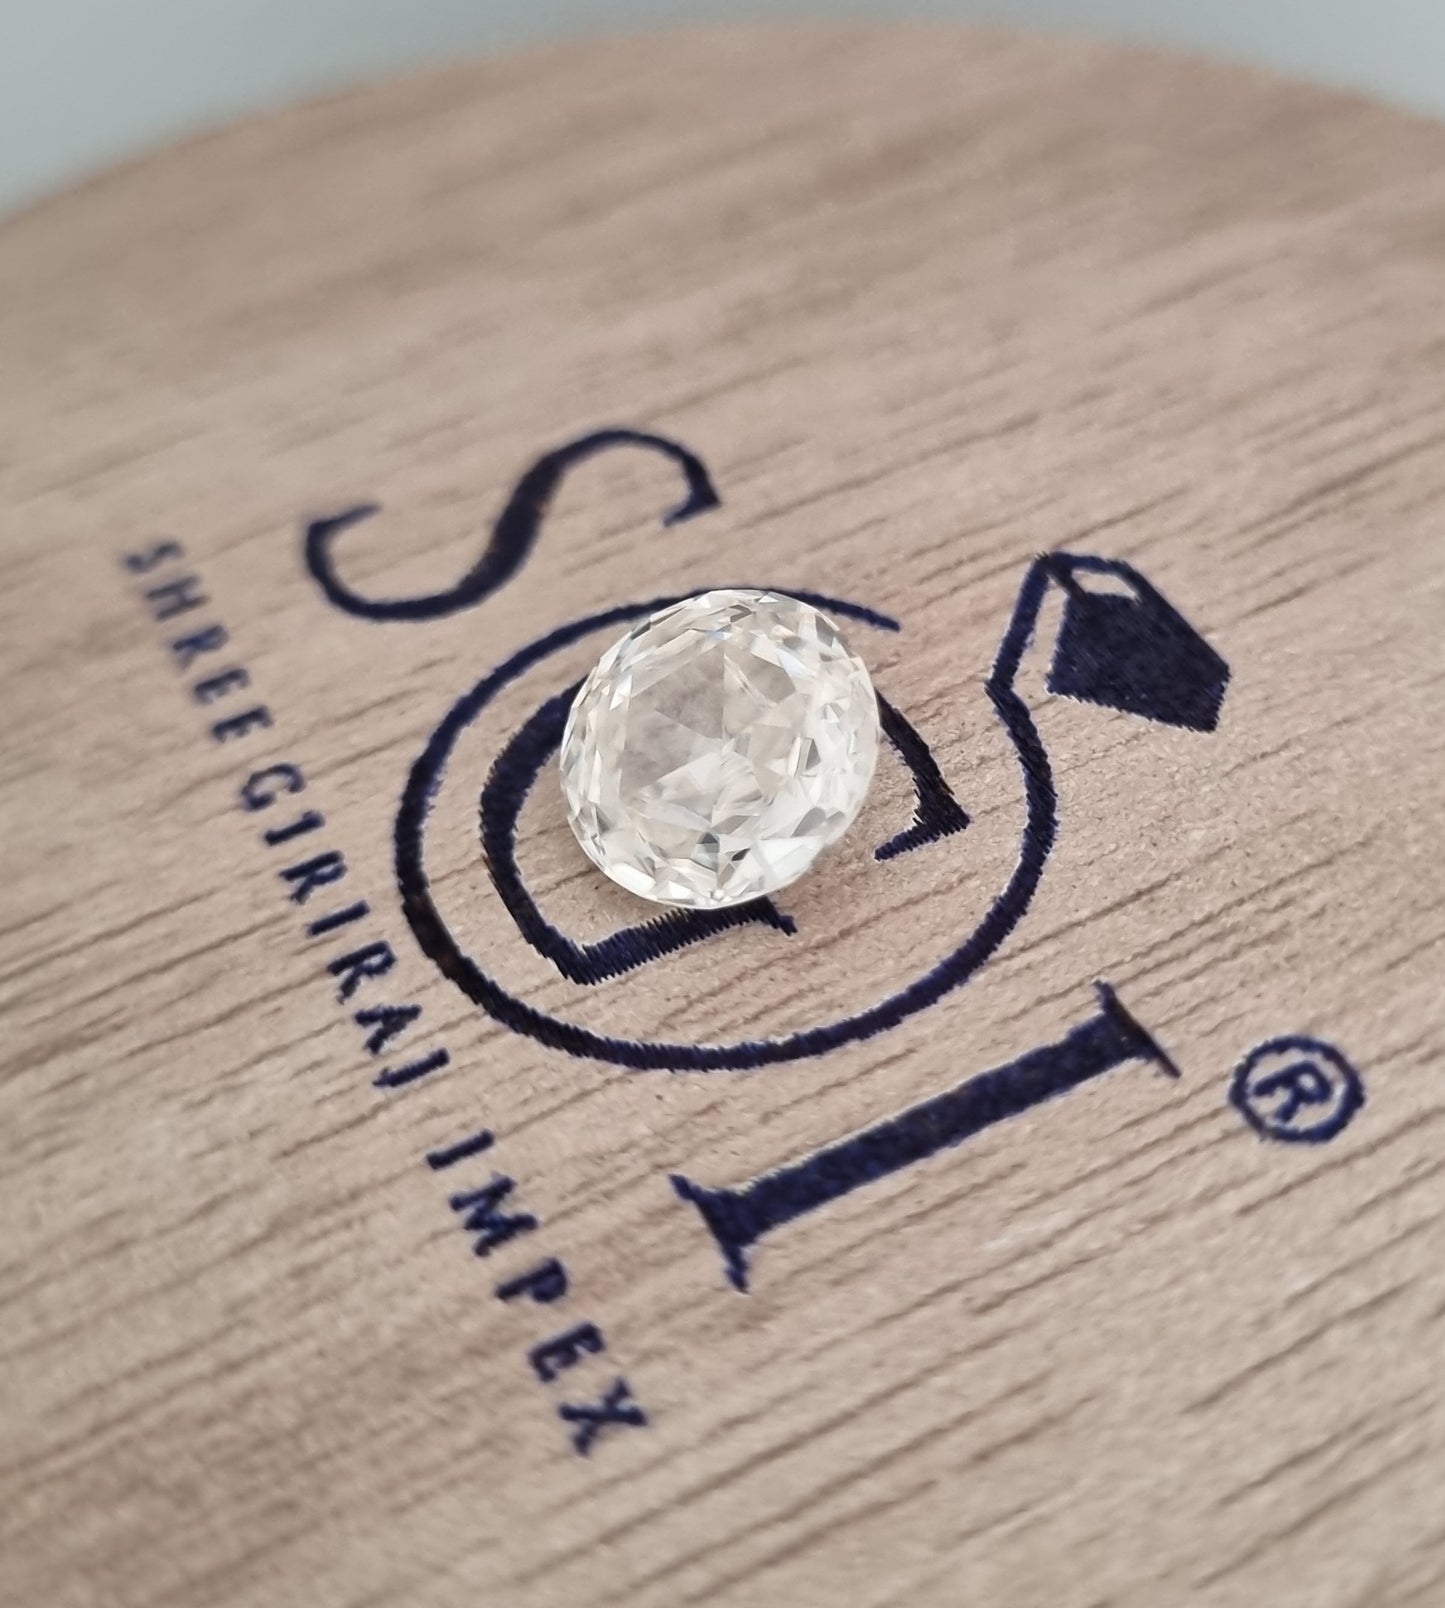 10mm White Round Rose Cut Moissanite Diamond For Jewellery Settings